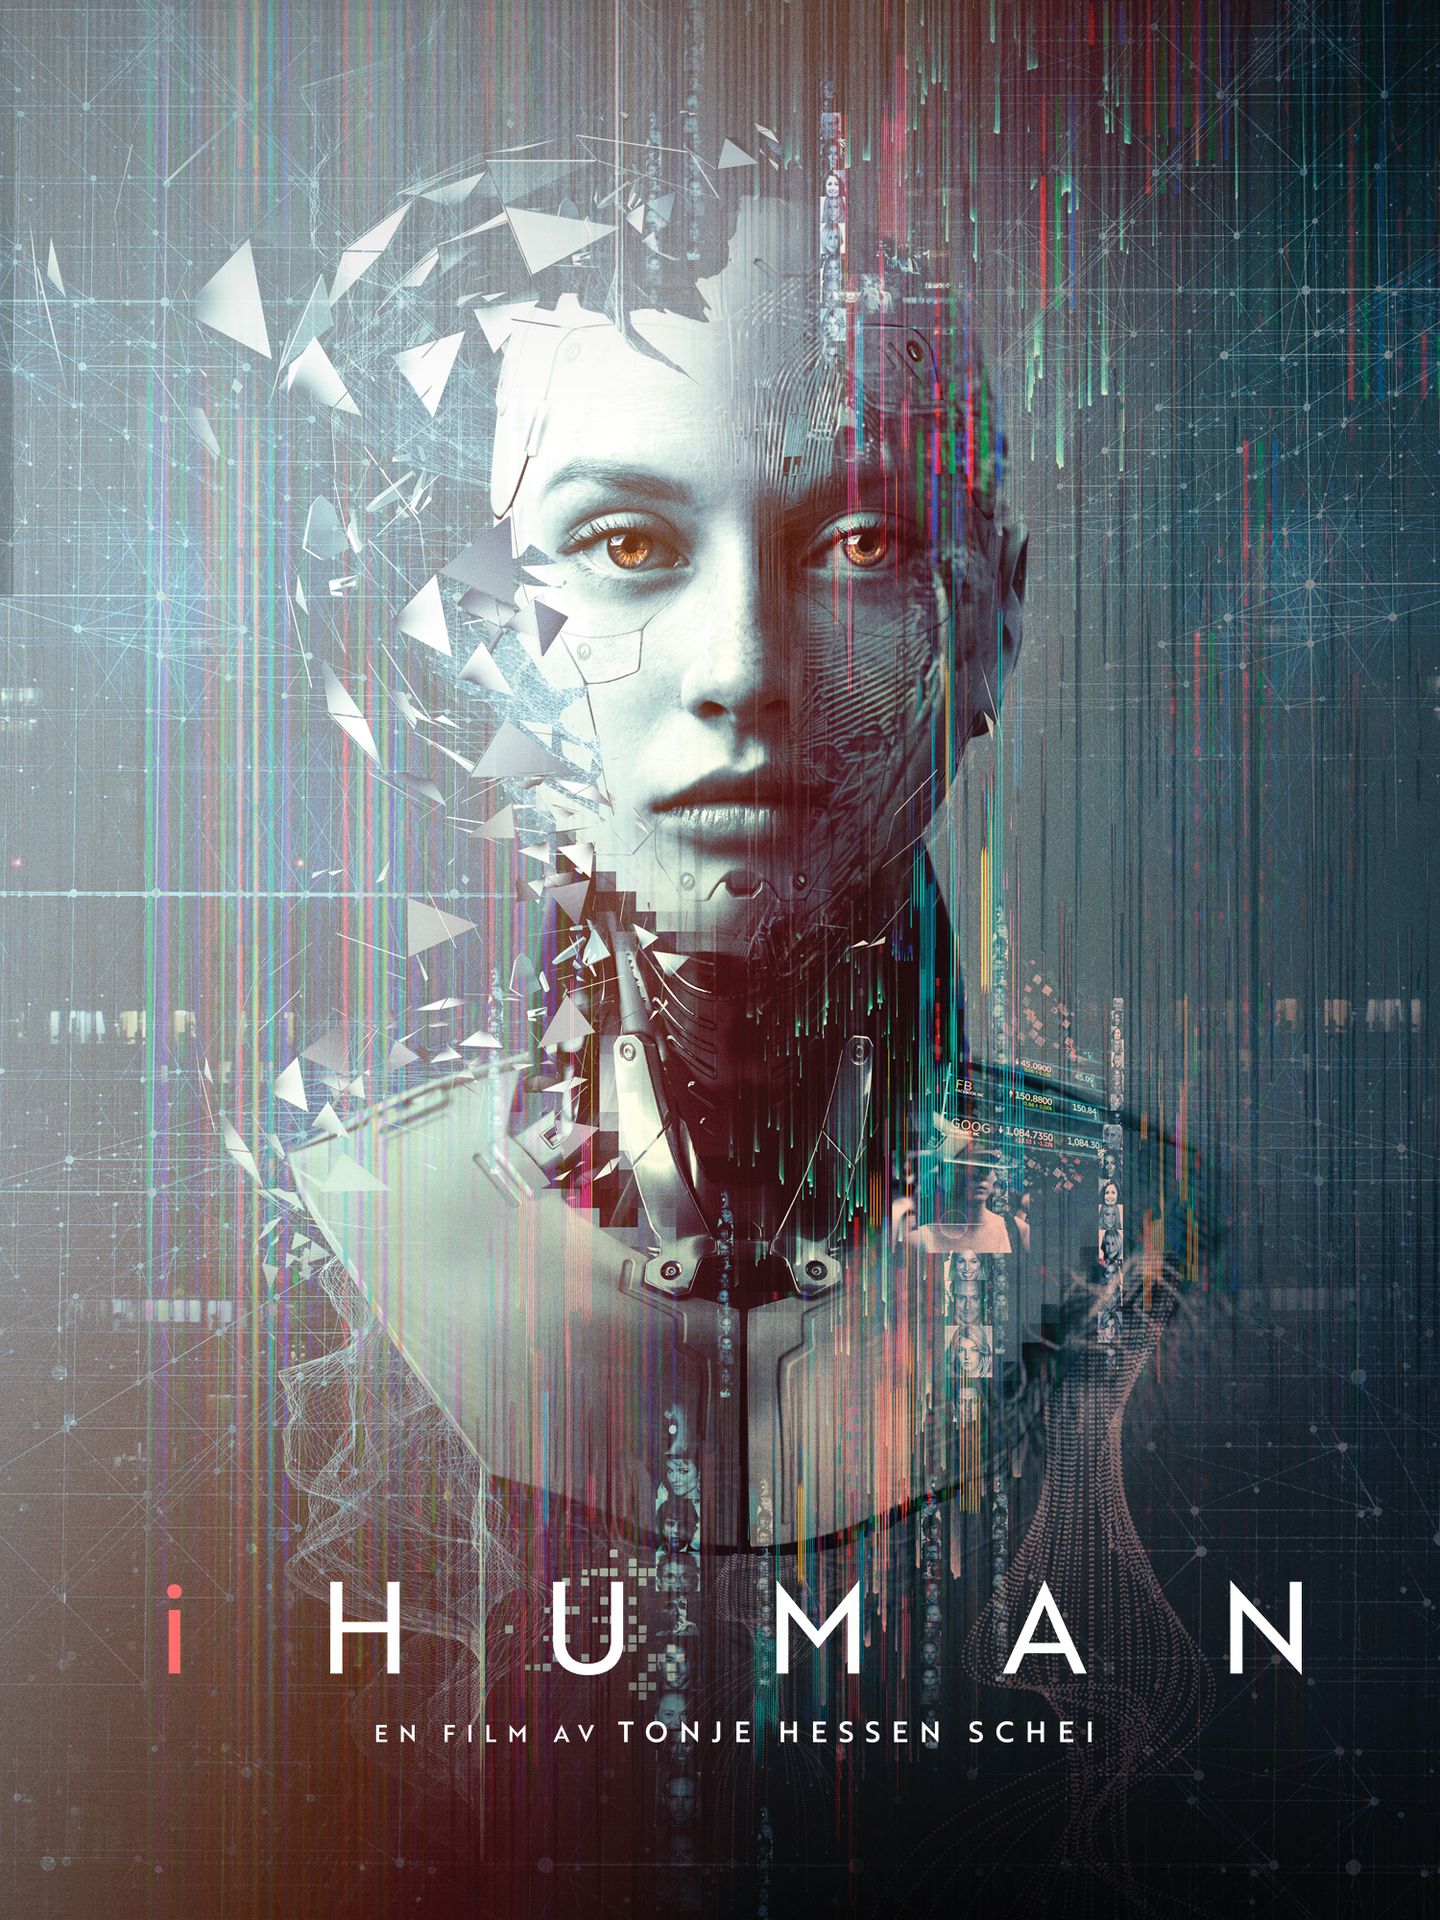 Plakat for 'iHUMAN'